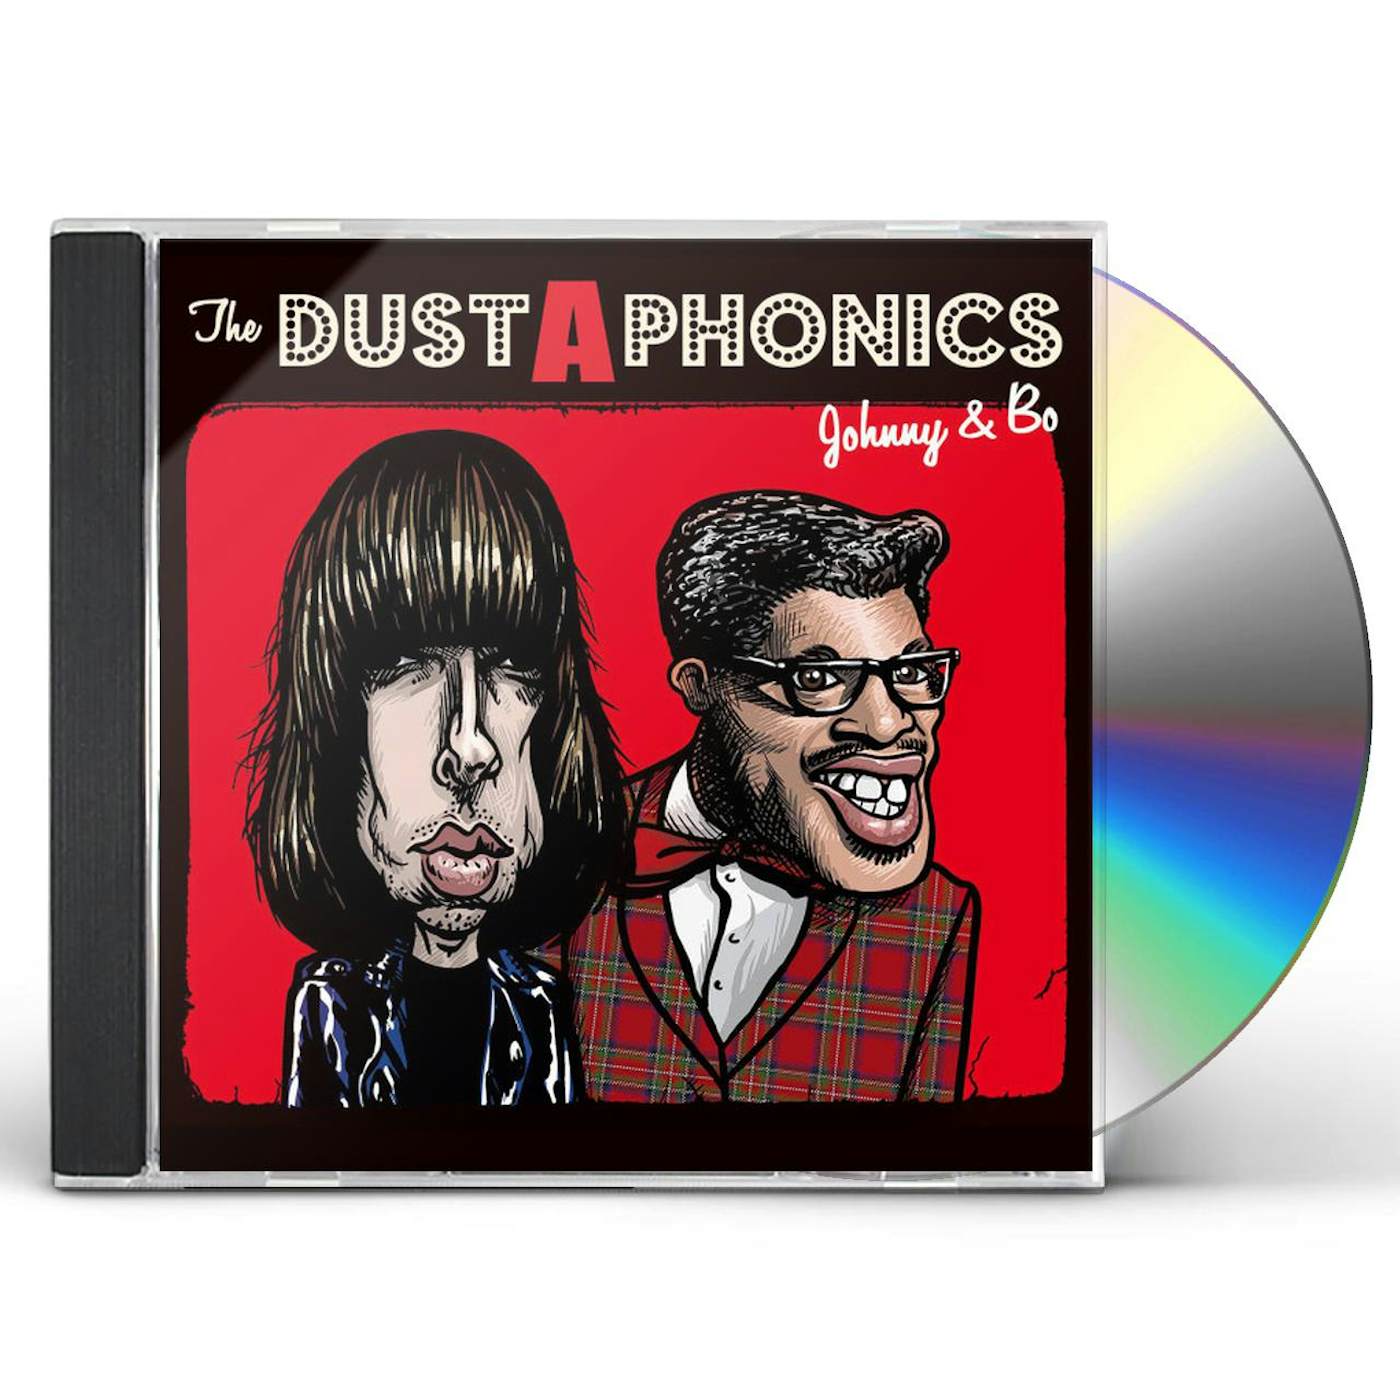 The Dustaphonics JOHNNY & BO CD